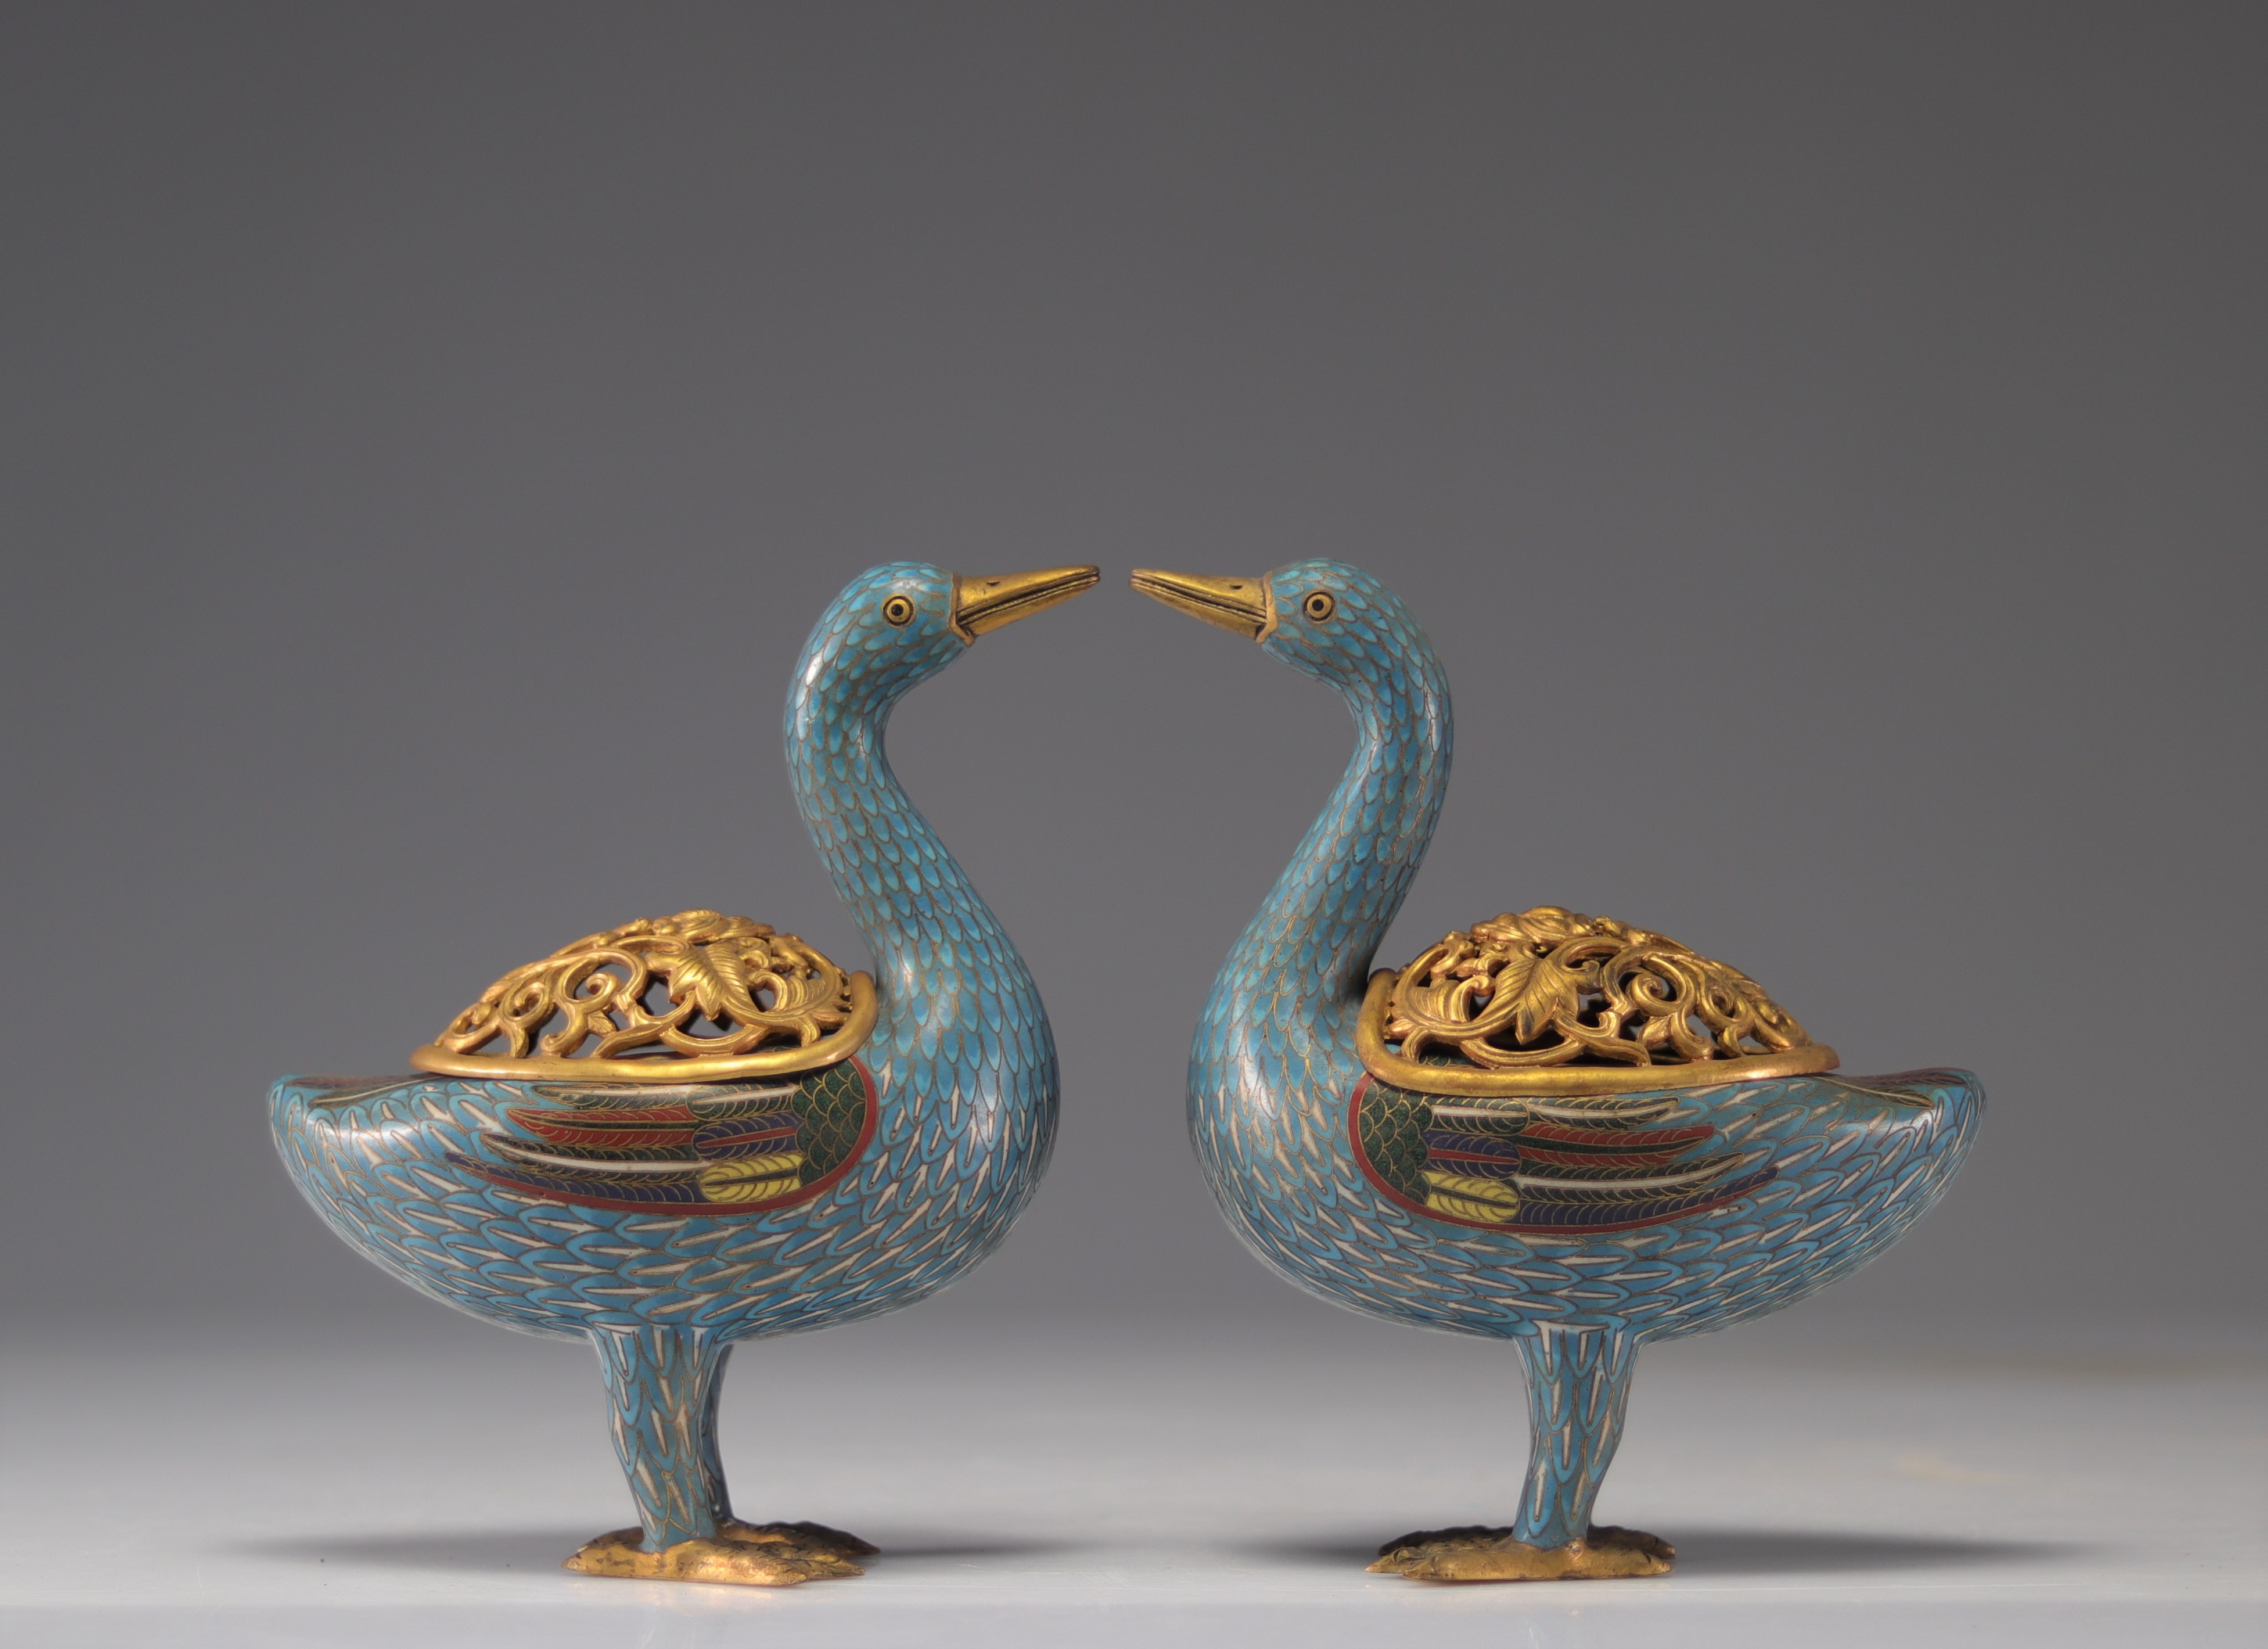 Pair of bronze cloisonne incense burners, Republic period